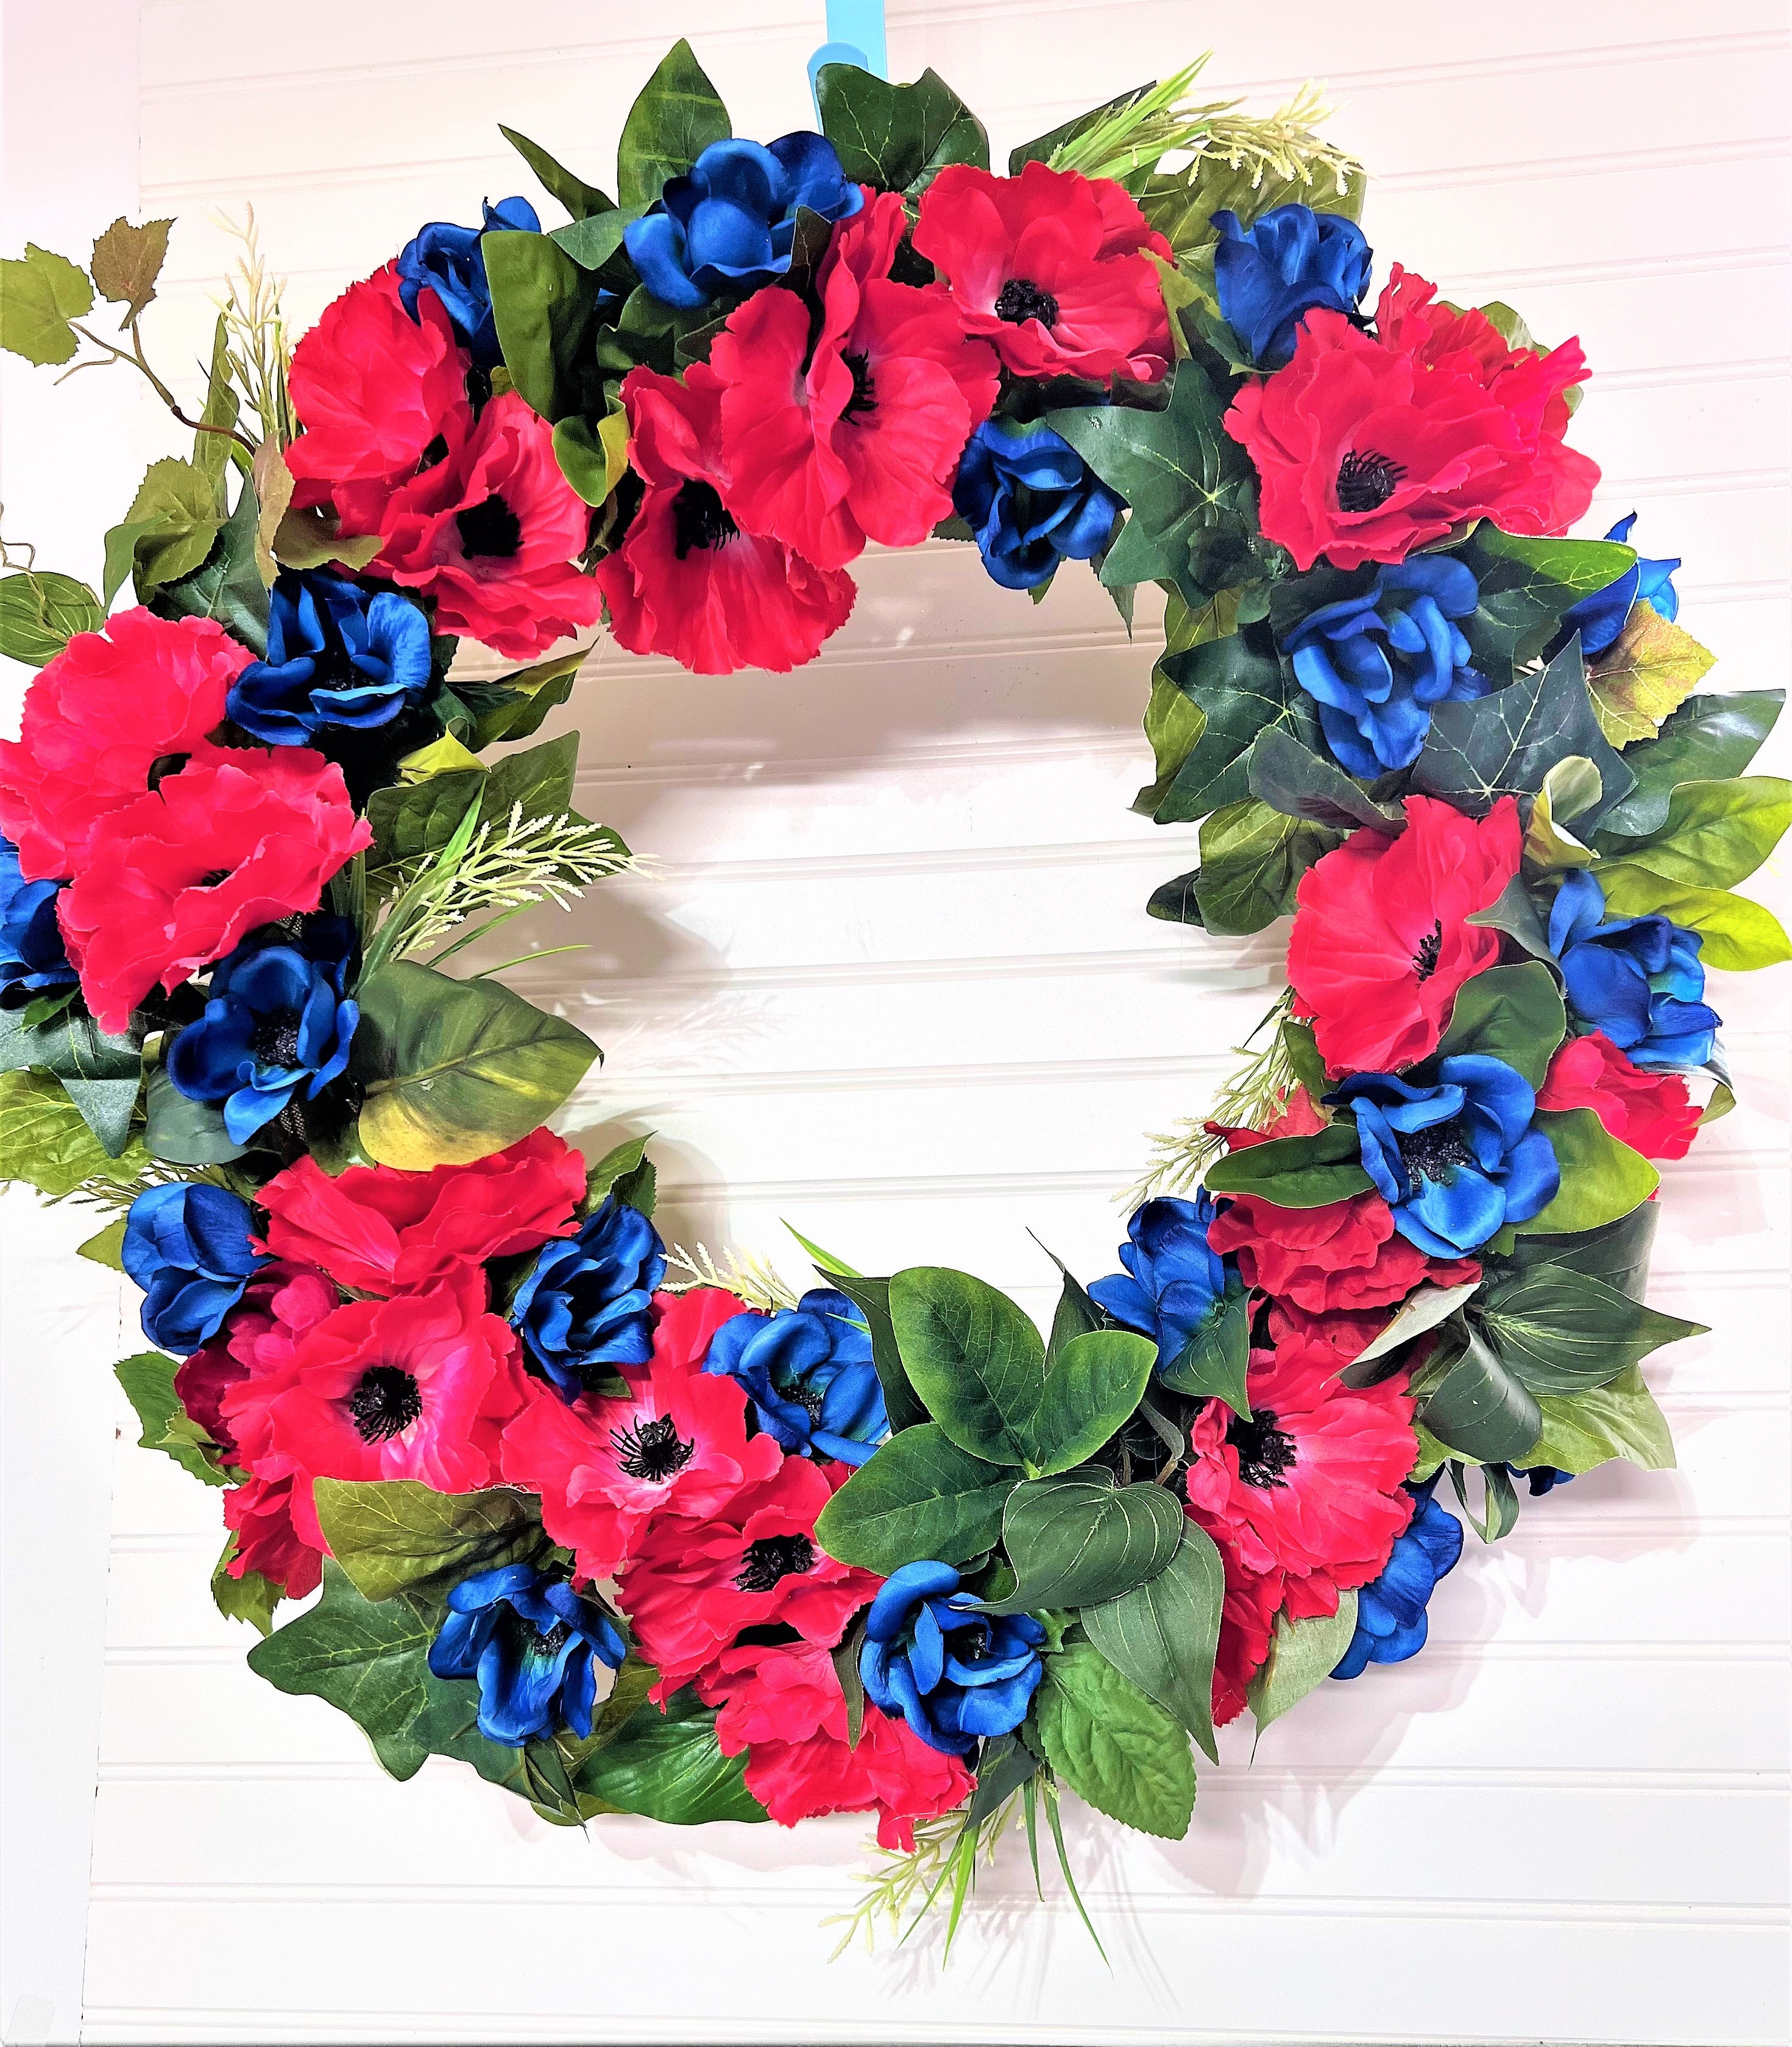 Red Poppy Anemone Wreath 28"